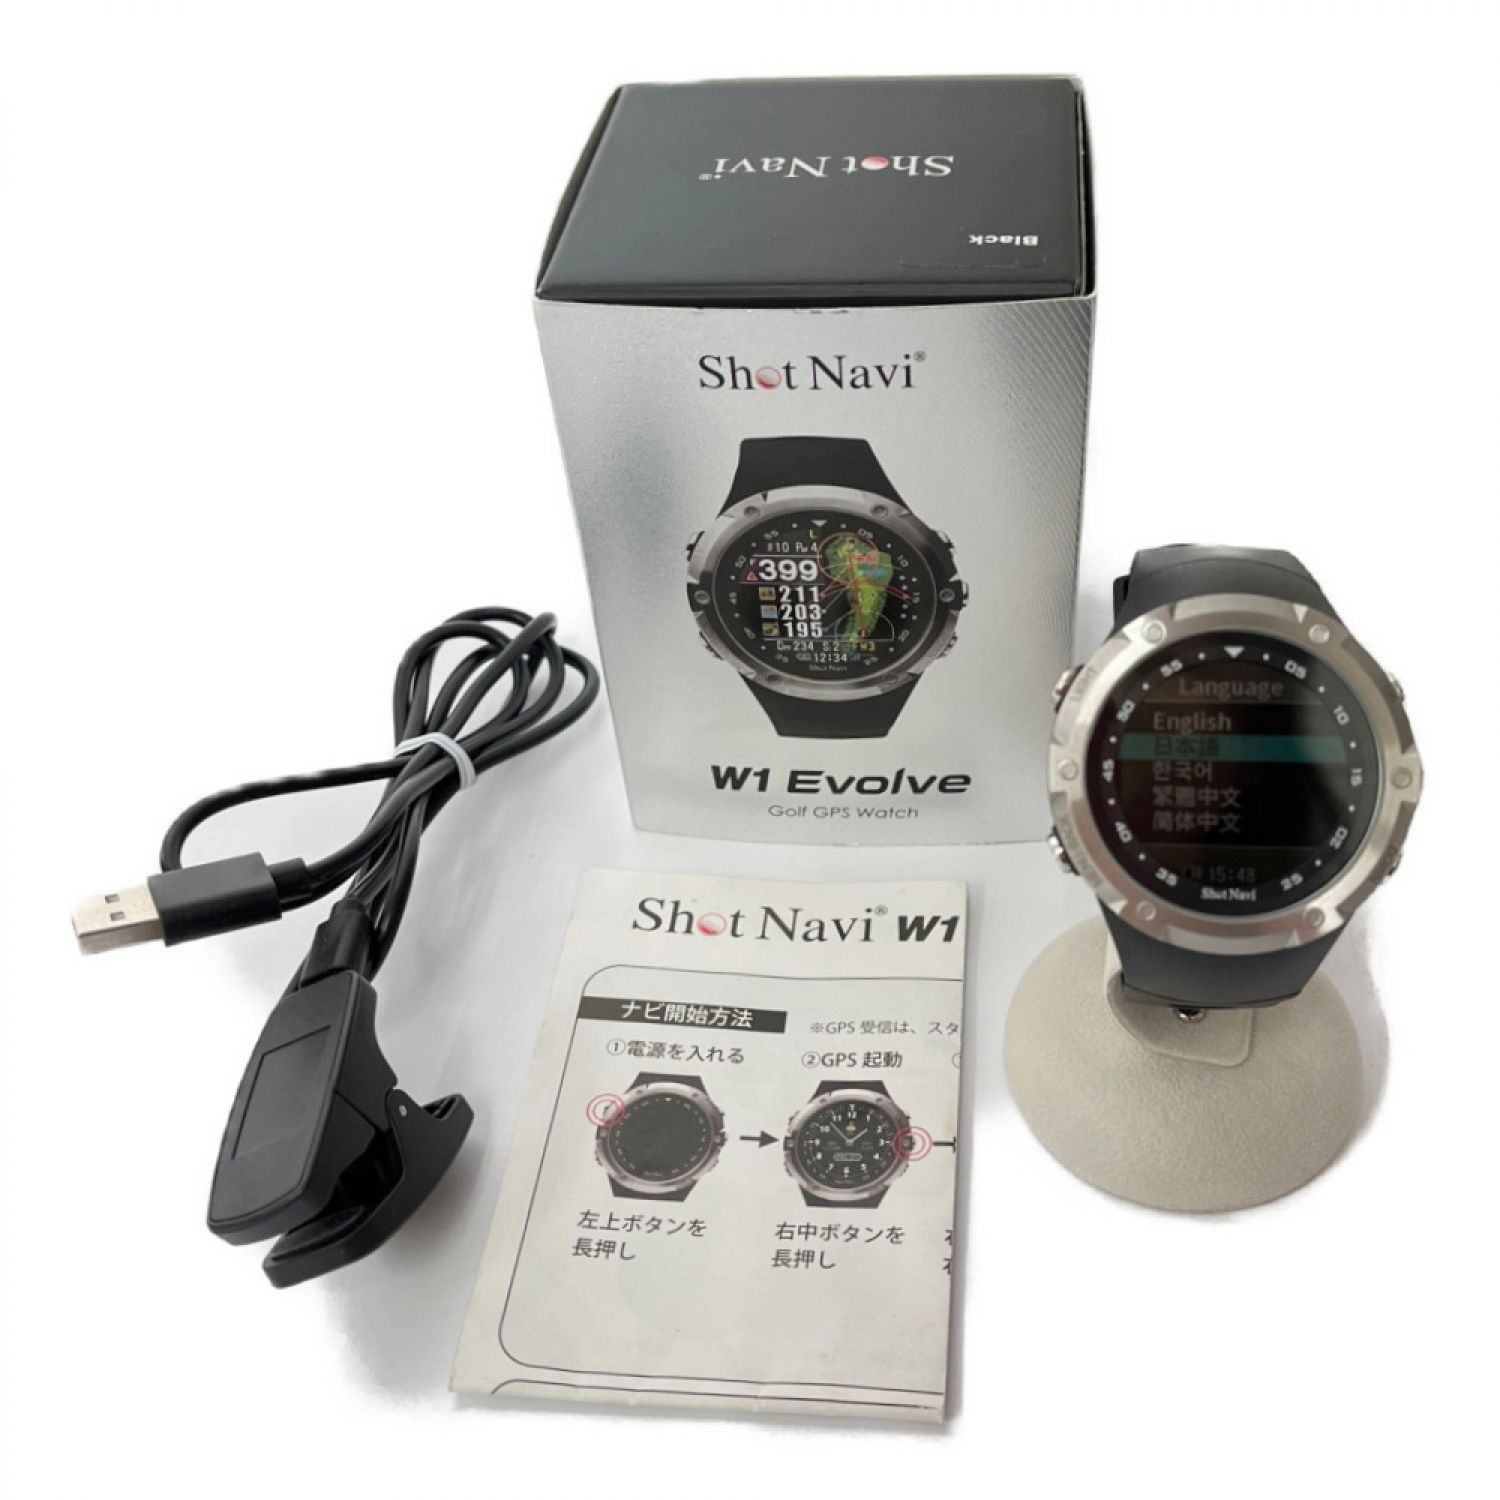 W1 Evolve/Golf GPS Watch【新品未使用品】-